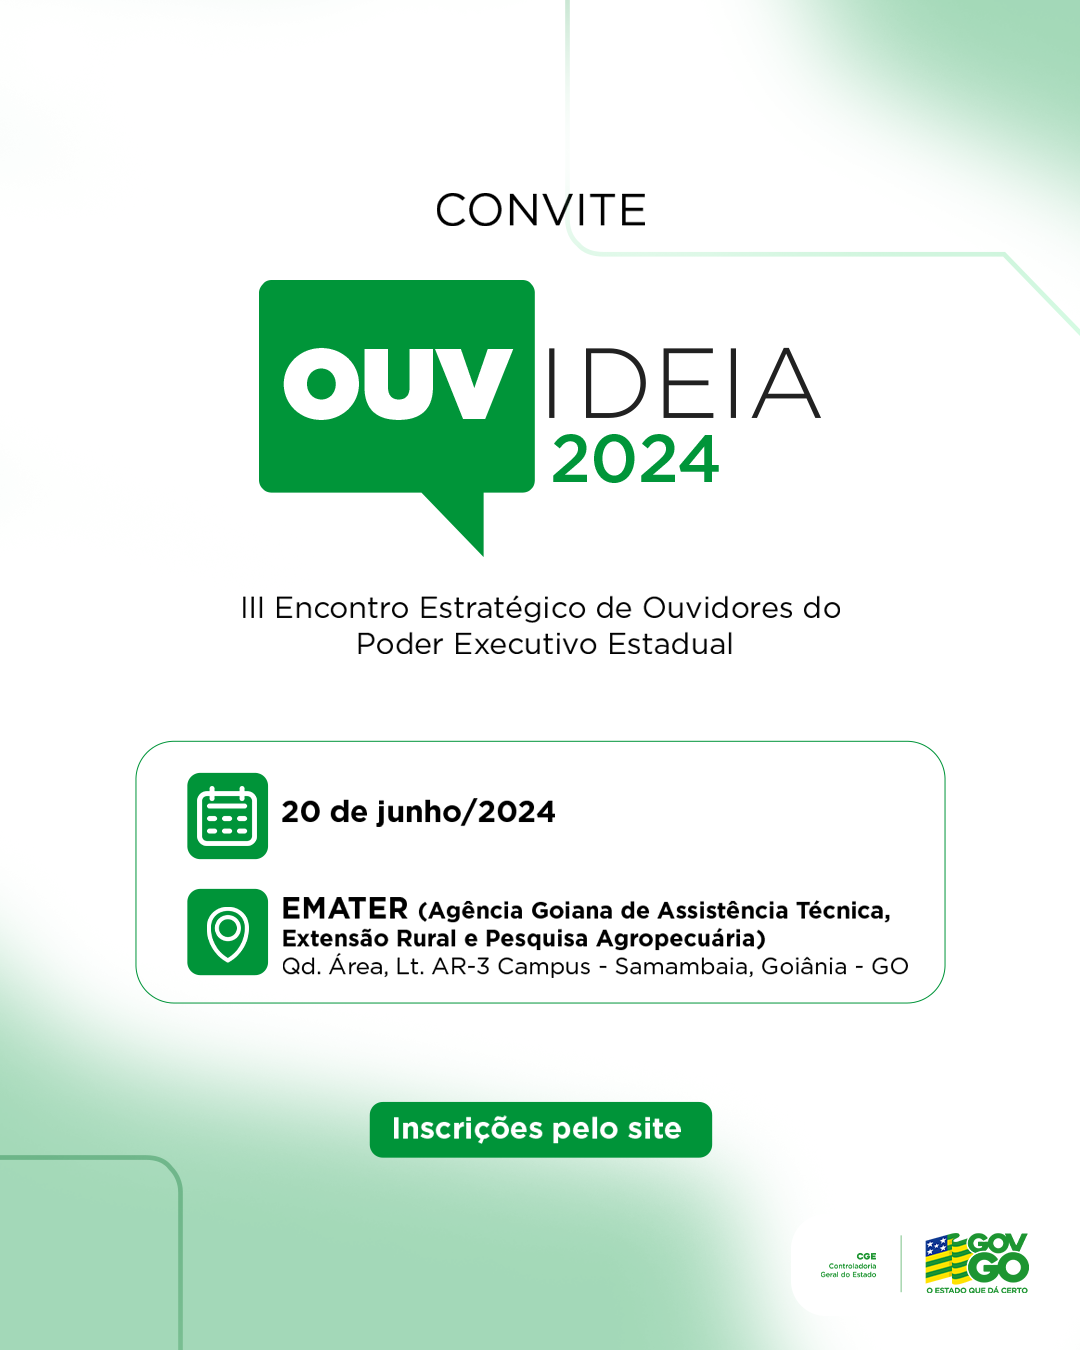 III Encontro Estratégico de Ouvidores do Poder Executivo Estadual de Goiás já tem data marcada 